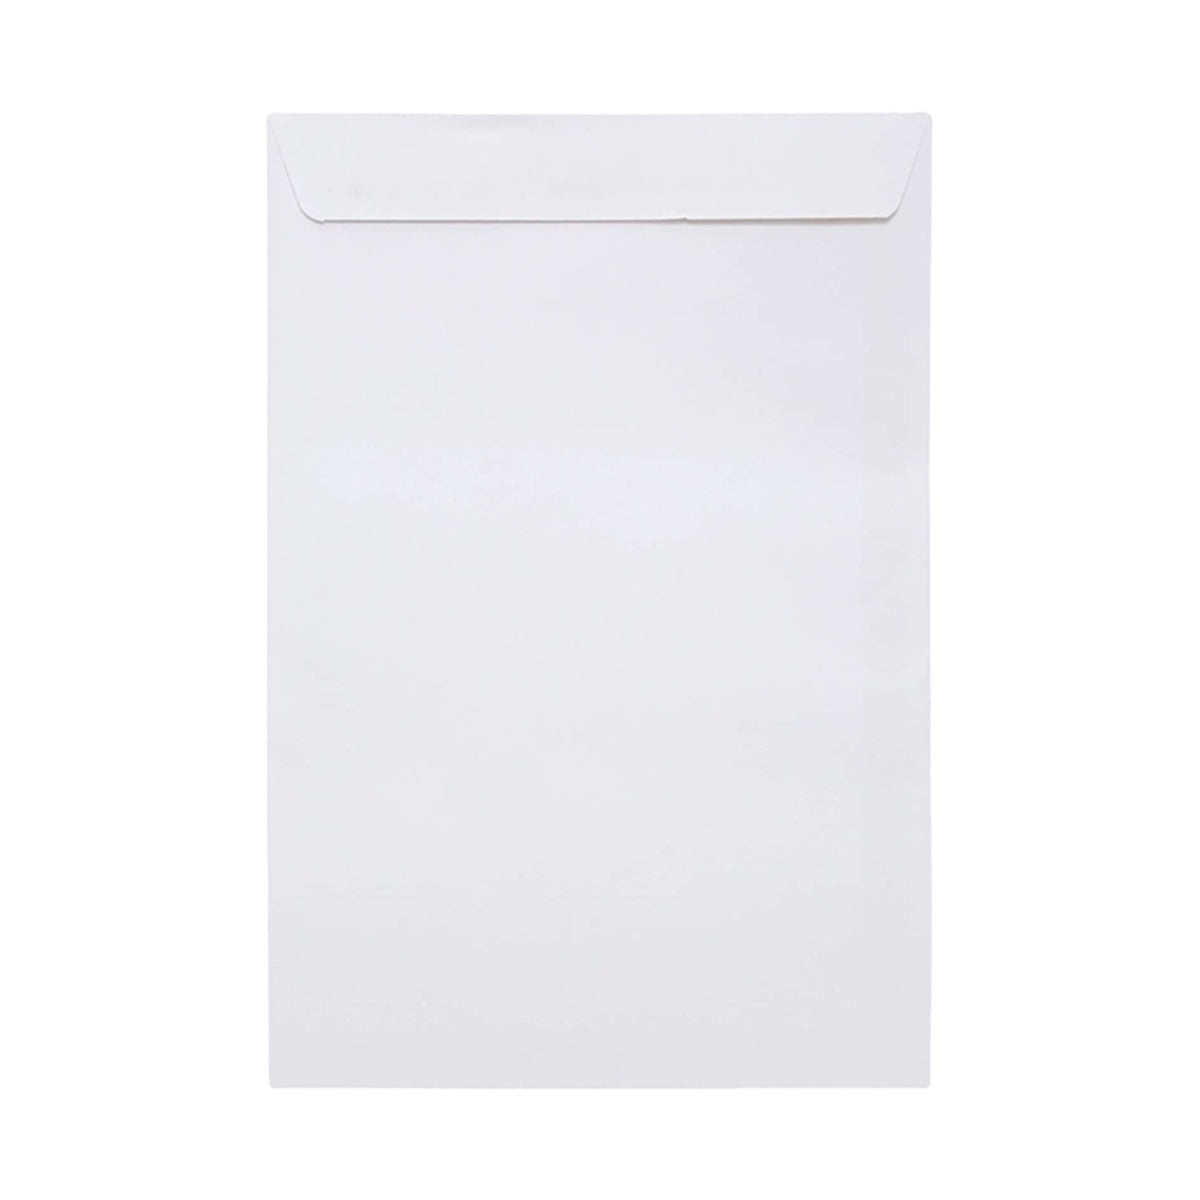 Hispapel Envelope 254 x 177 mm, 10 x 7 inches, B5, 100gsm, White